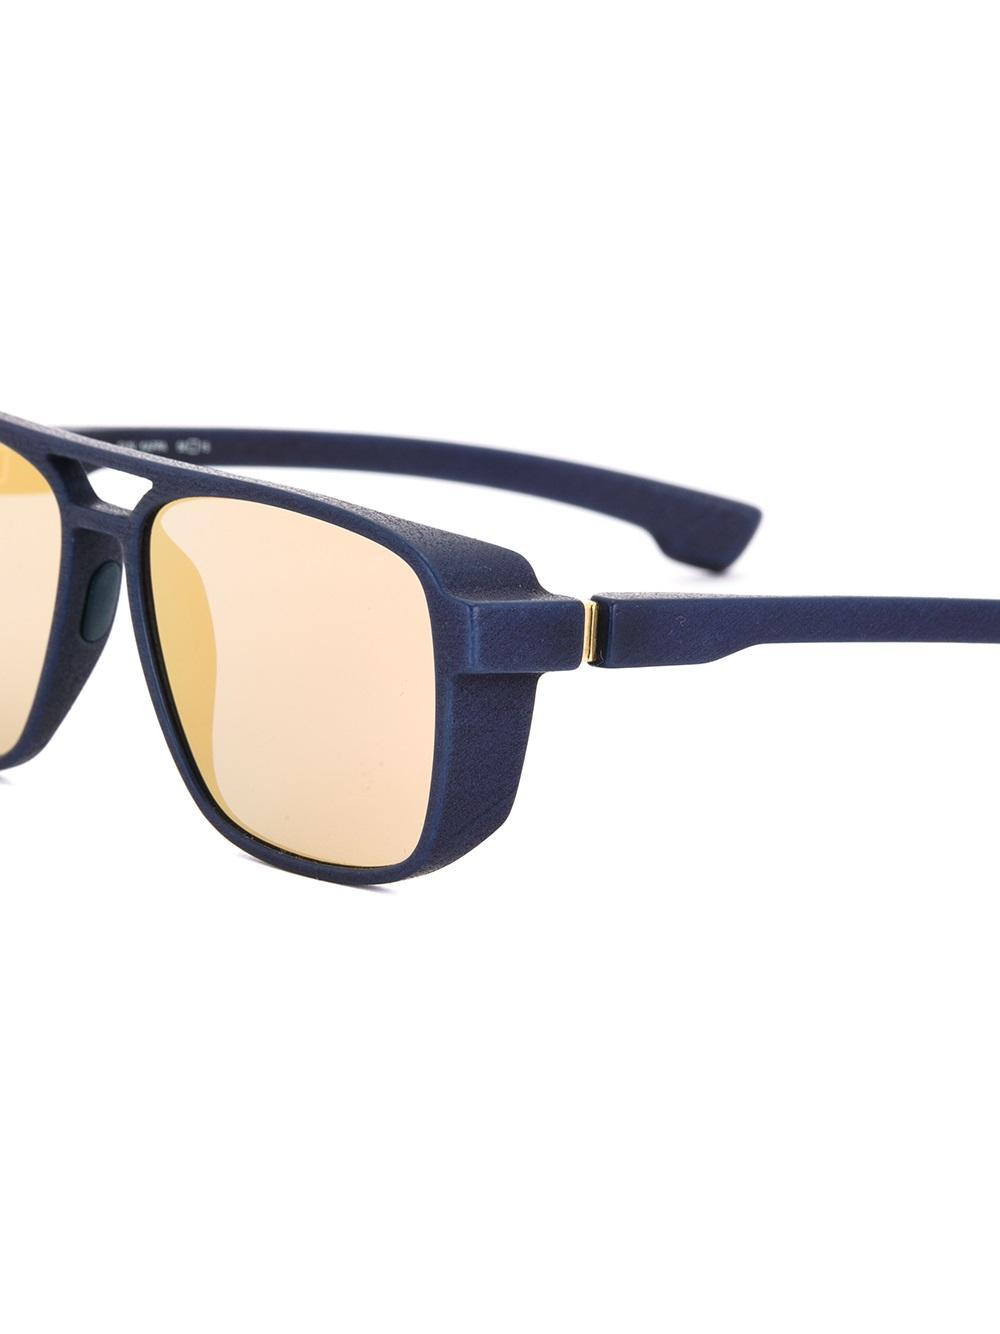 Mykita Synthetic 'kappa' Sunglasses in Blue - Lyst